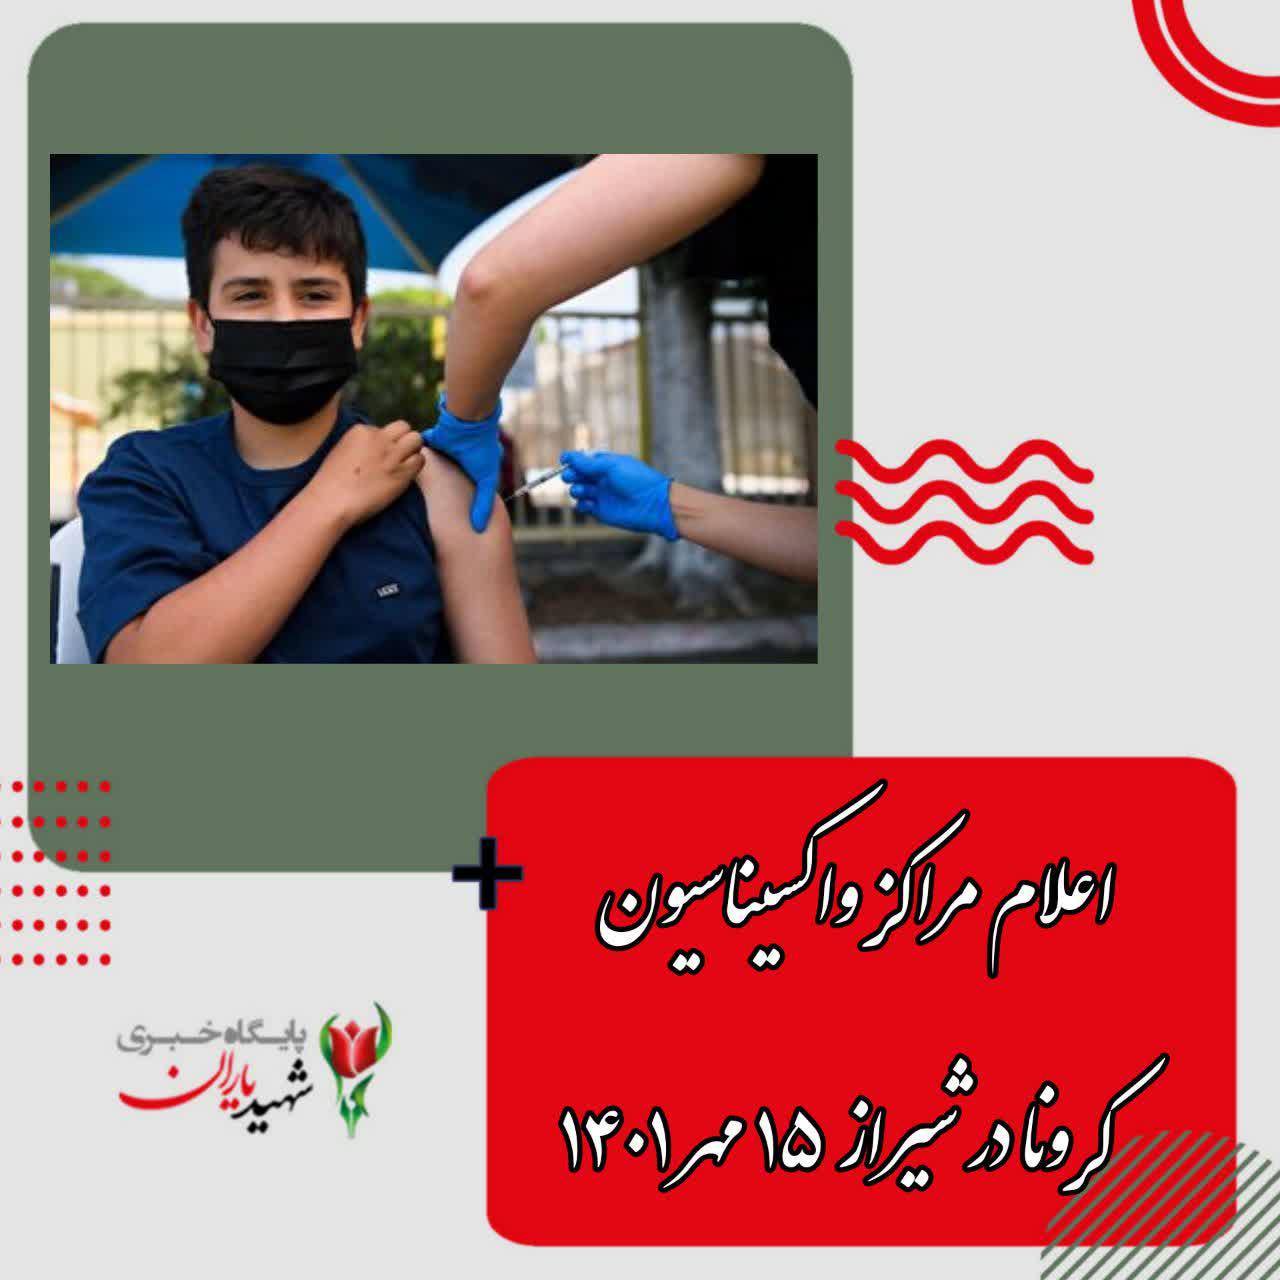 اعلام مراکز واکسیناسیون کرونا در شیراز ۱۵ مهر ۱۴۰۱